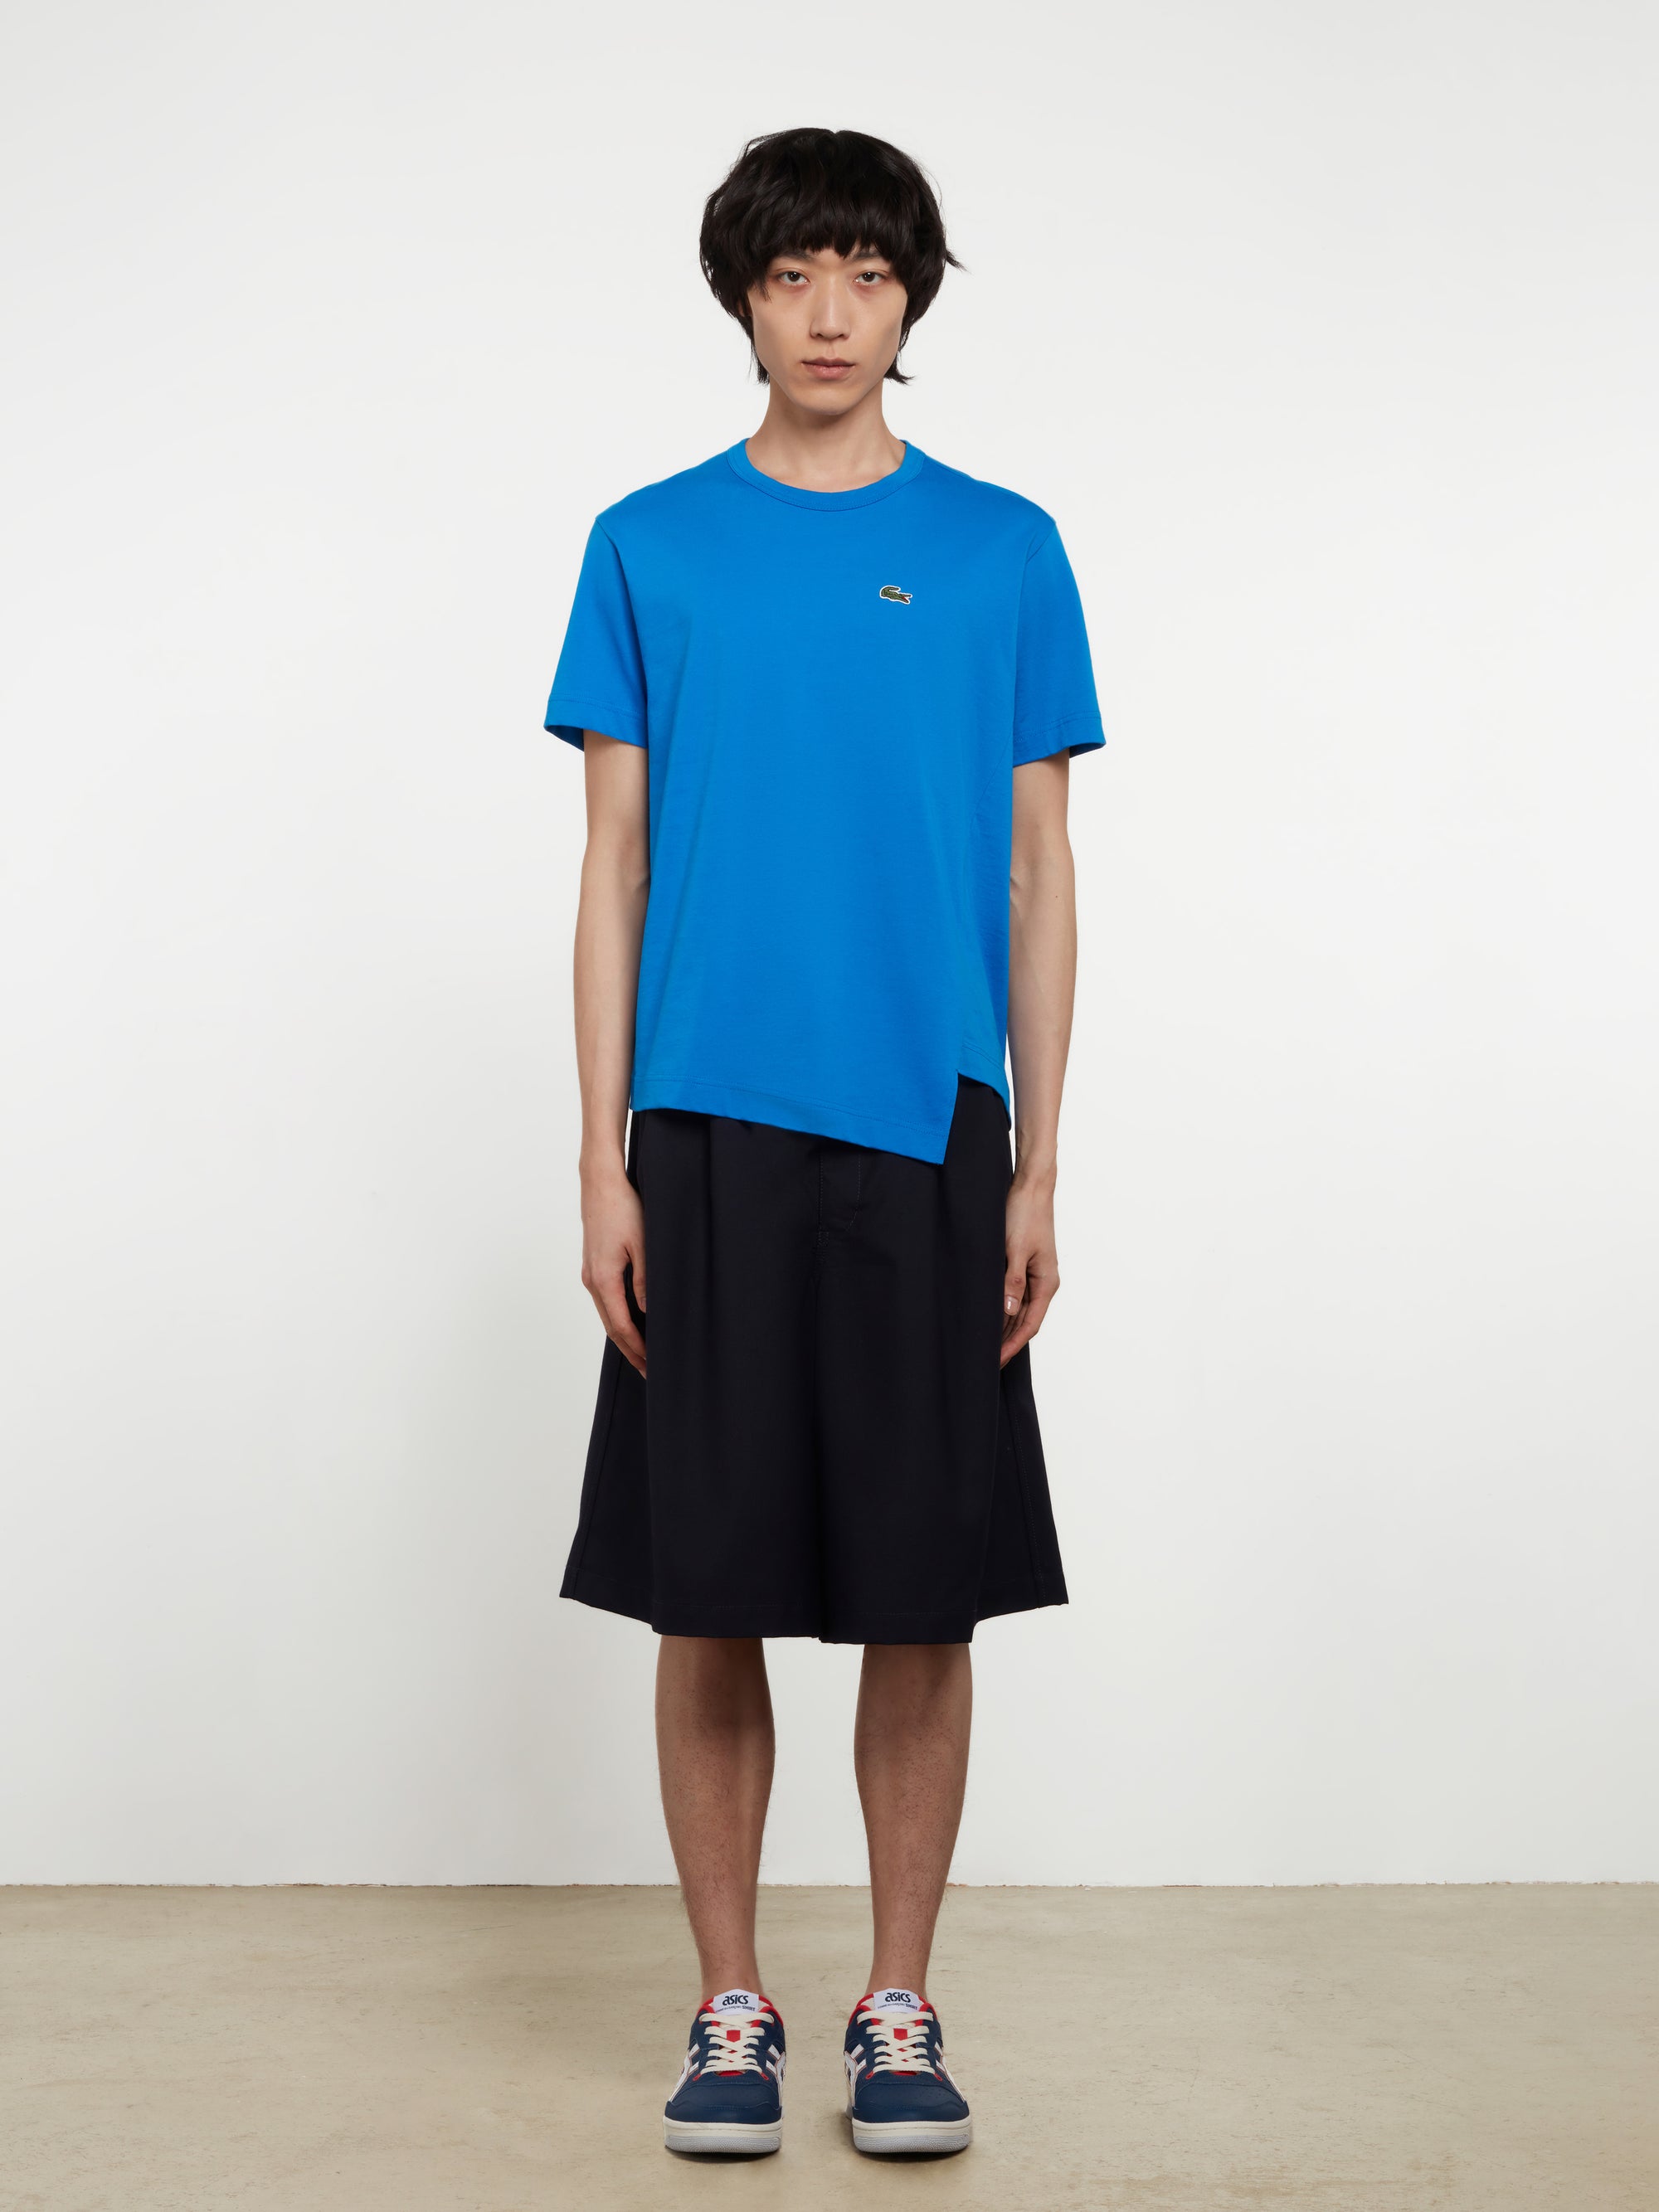 CDG Shirt - Lacoste Men's T-Shirt - (Blue) view 4